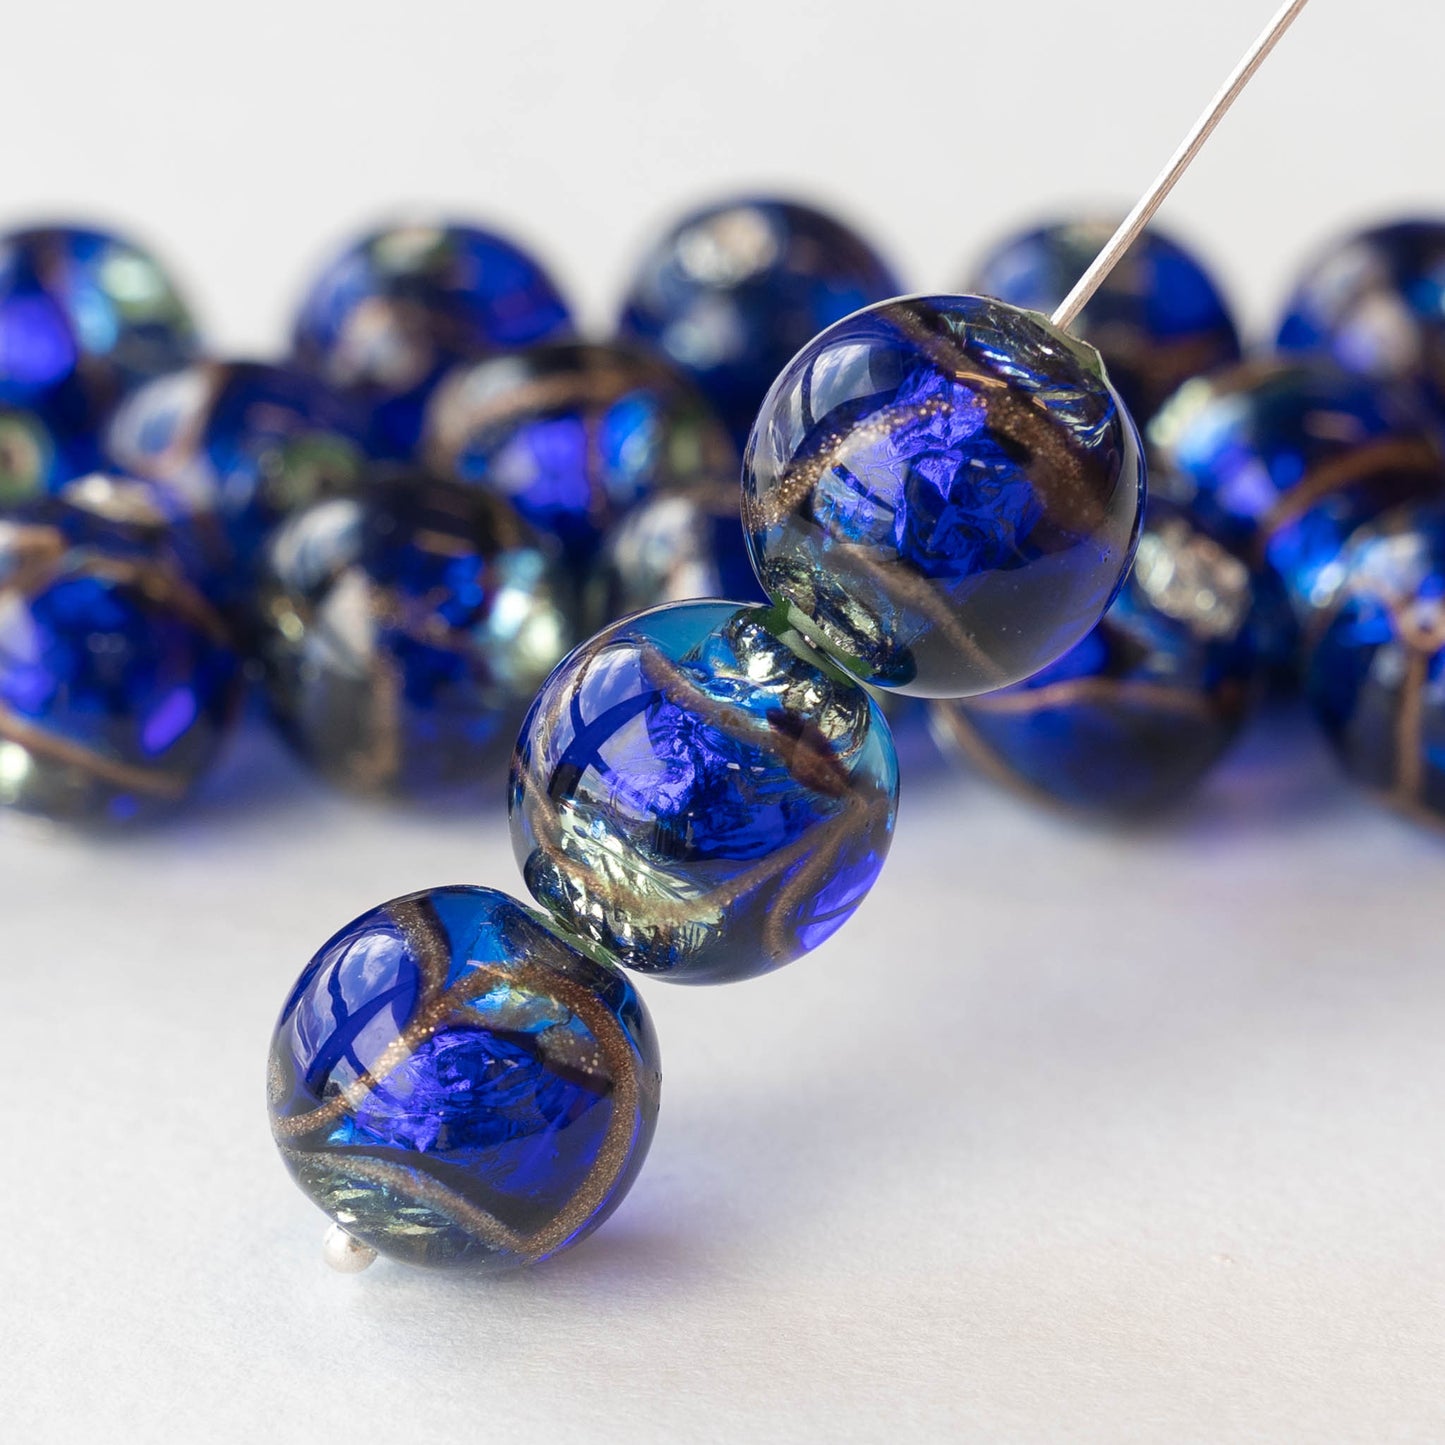 14mm Handmade Lampwork Foil Beads - Cobalt Blue - 2, 4 or 8